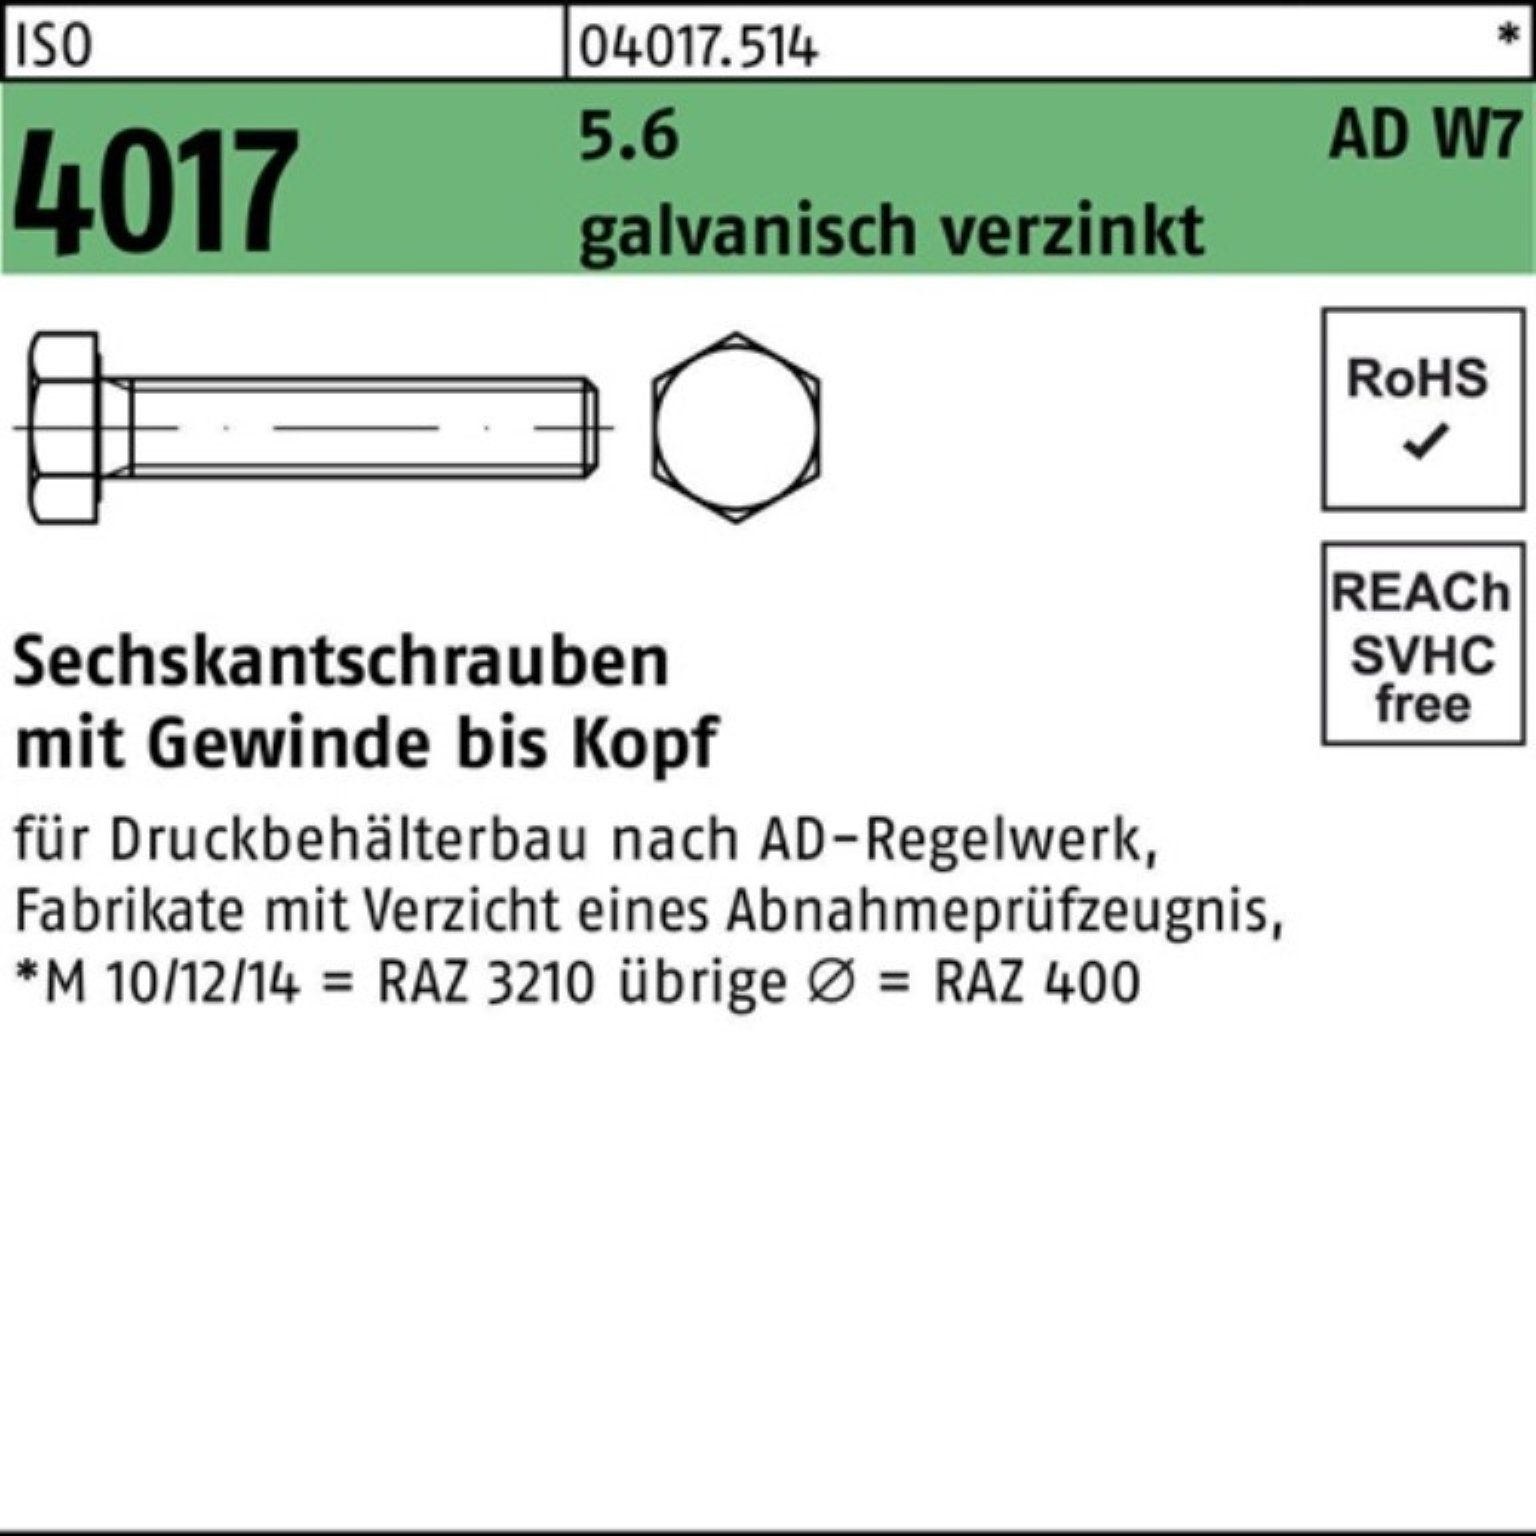 Bufab Sechskantschraube 100er Pack Sechskantschraube galv.verz. 4017 ISO AD M20x 40 VG W7 5.6